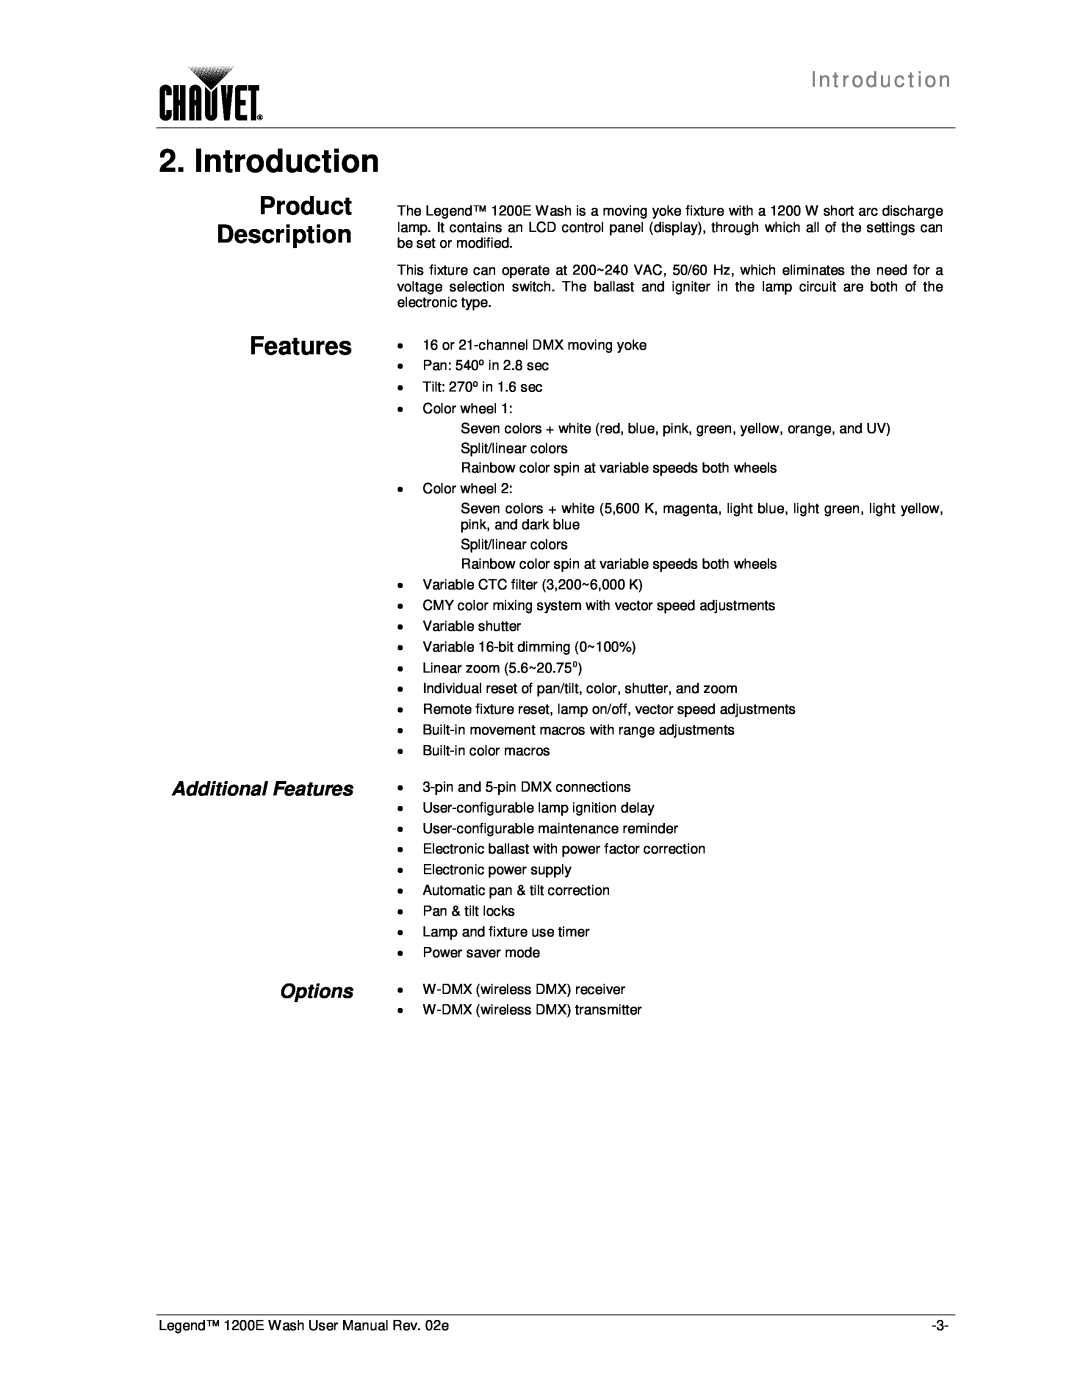 Chauvet 1200E user manual Introduction, Product Description, Additional Features Options 